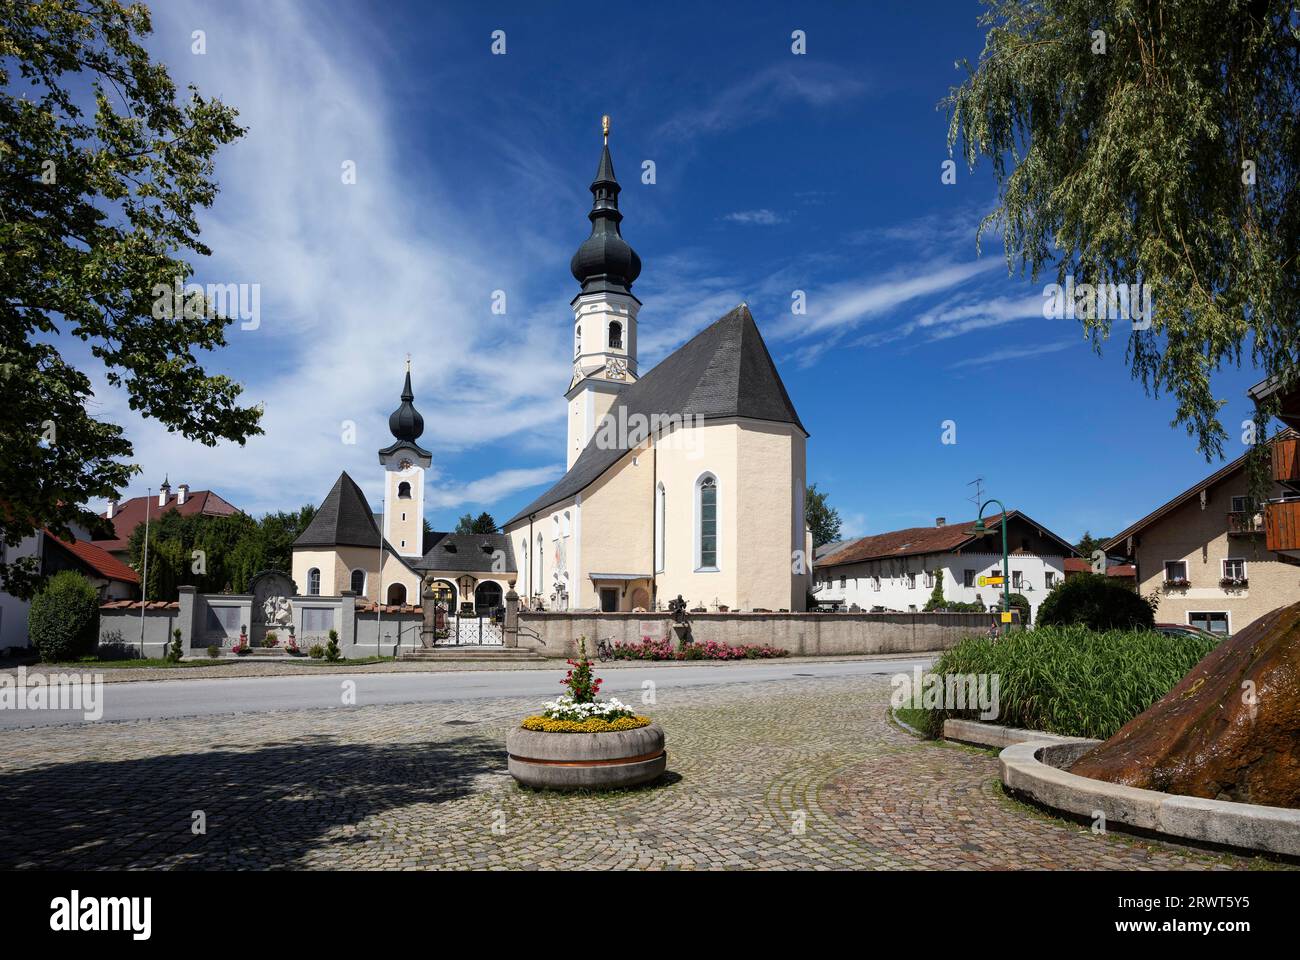 Market square with parish church, Berndorf bei Salzburg, Salzburger Seenland, Flachgau, Land Salzburg, Austria, Europe Stock Photo